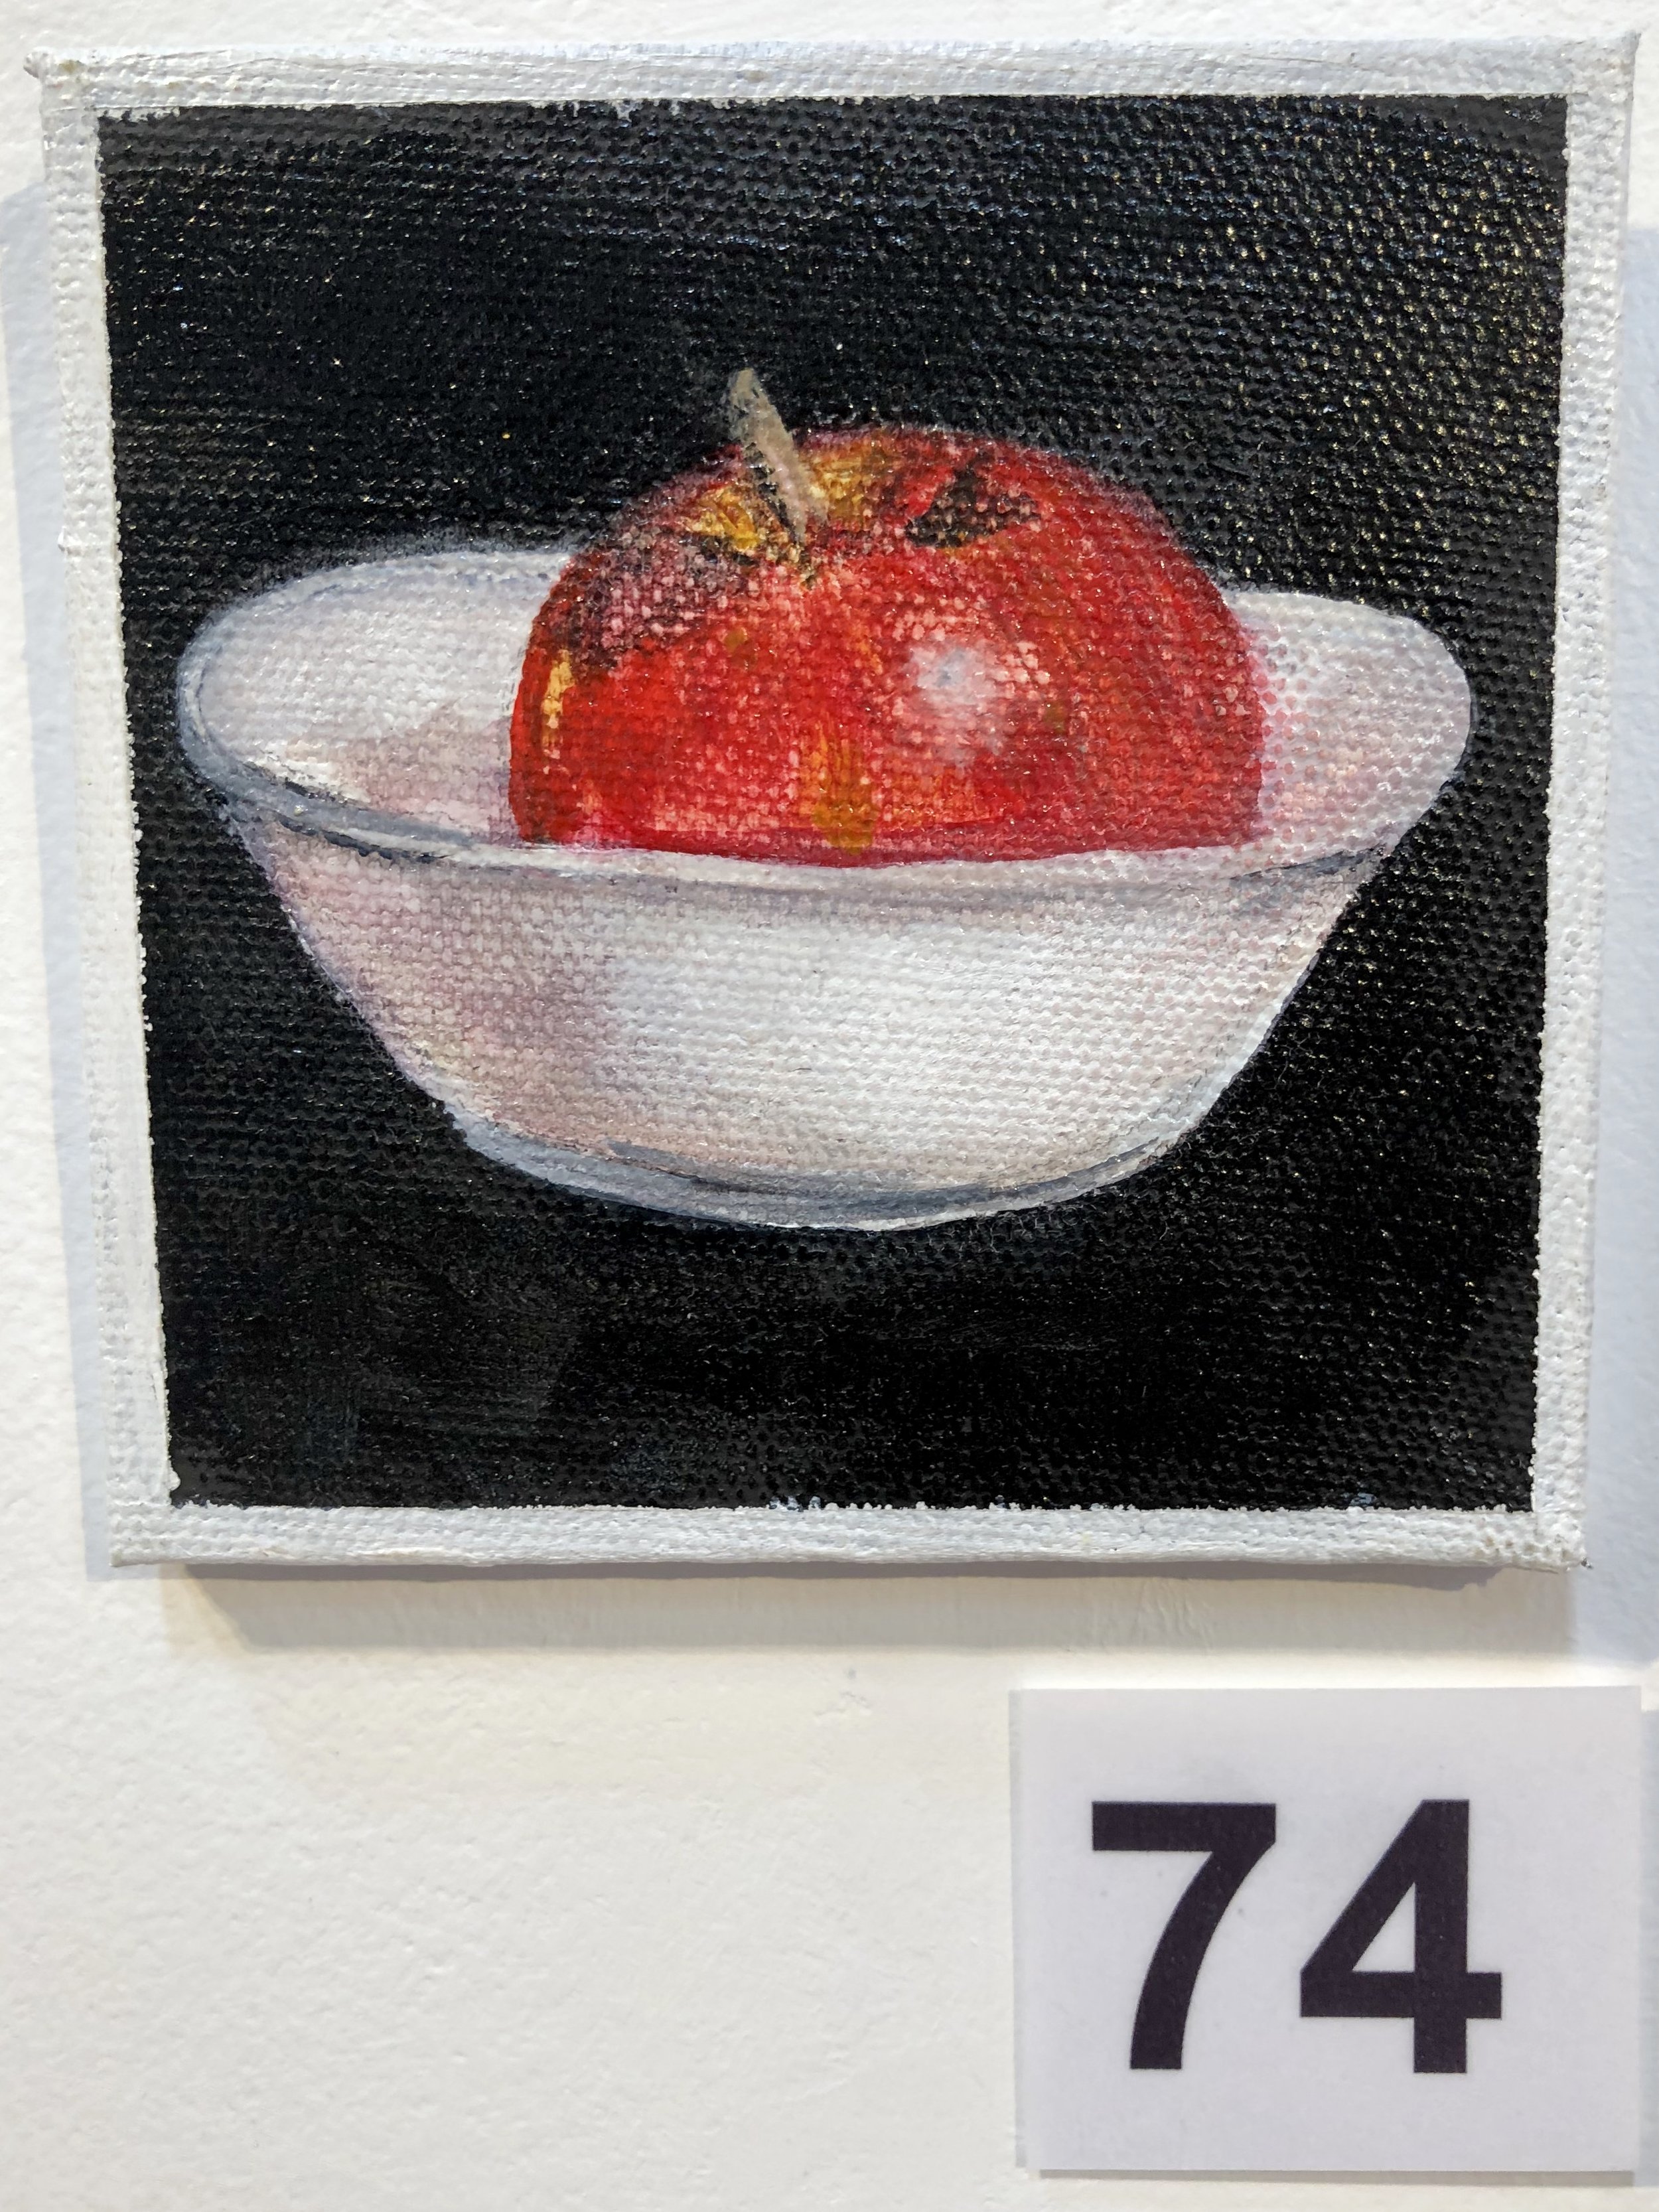 "Apple in a white bowl" by Kaye Kirkland